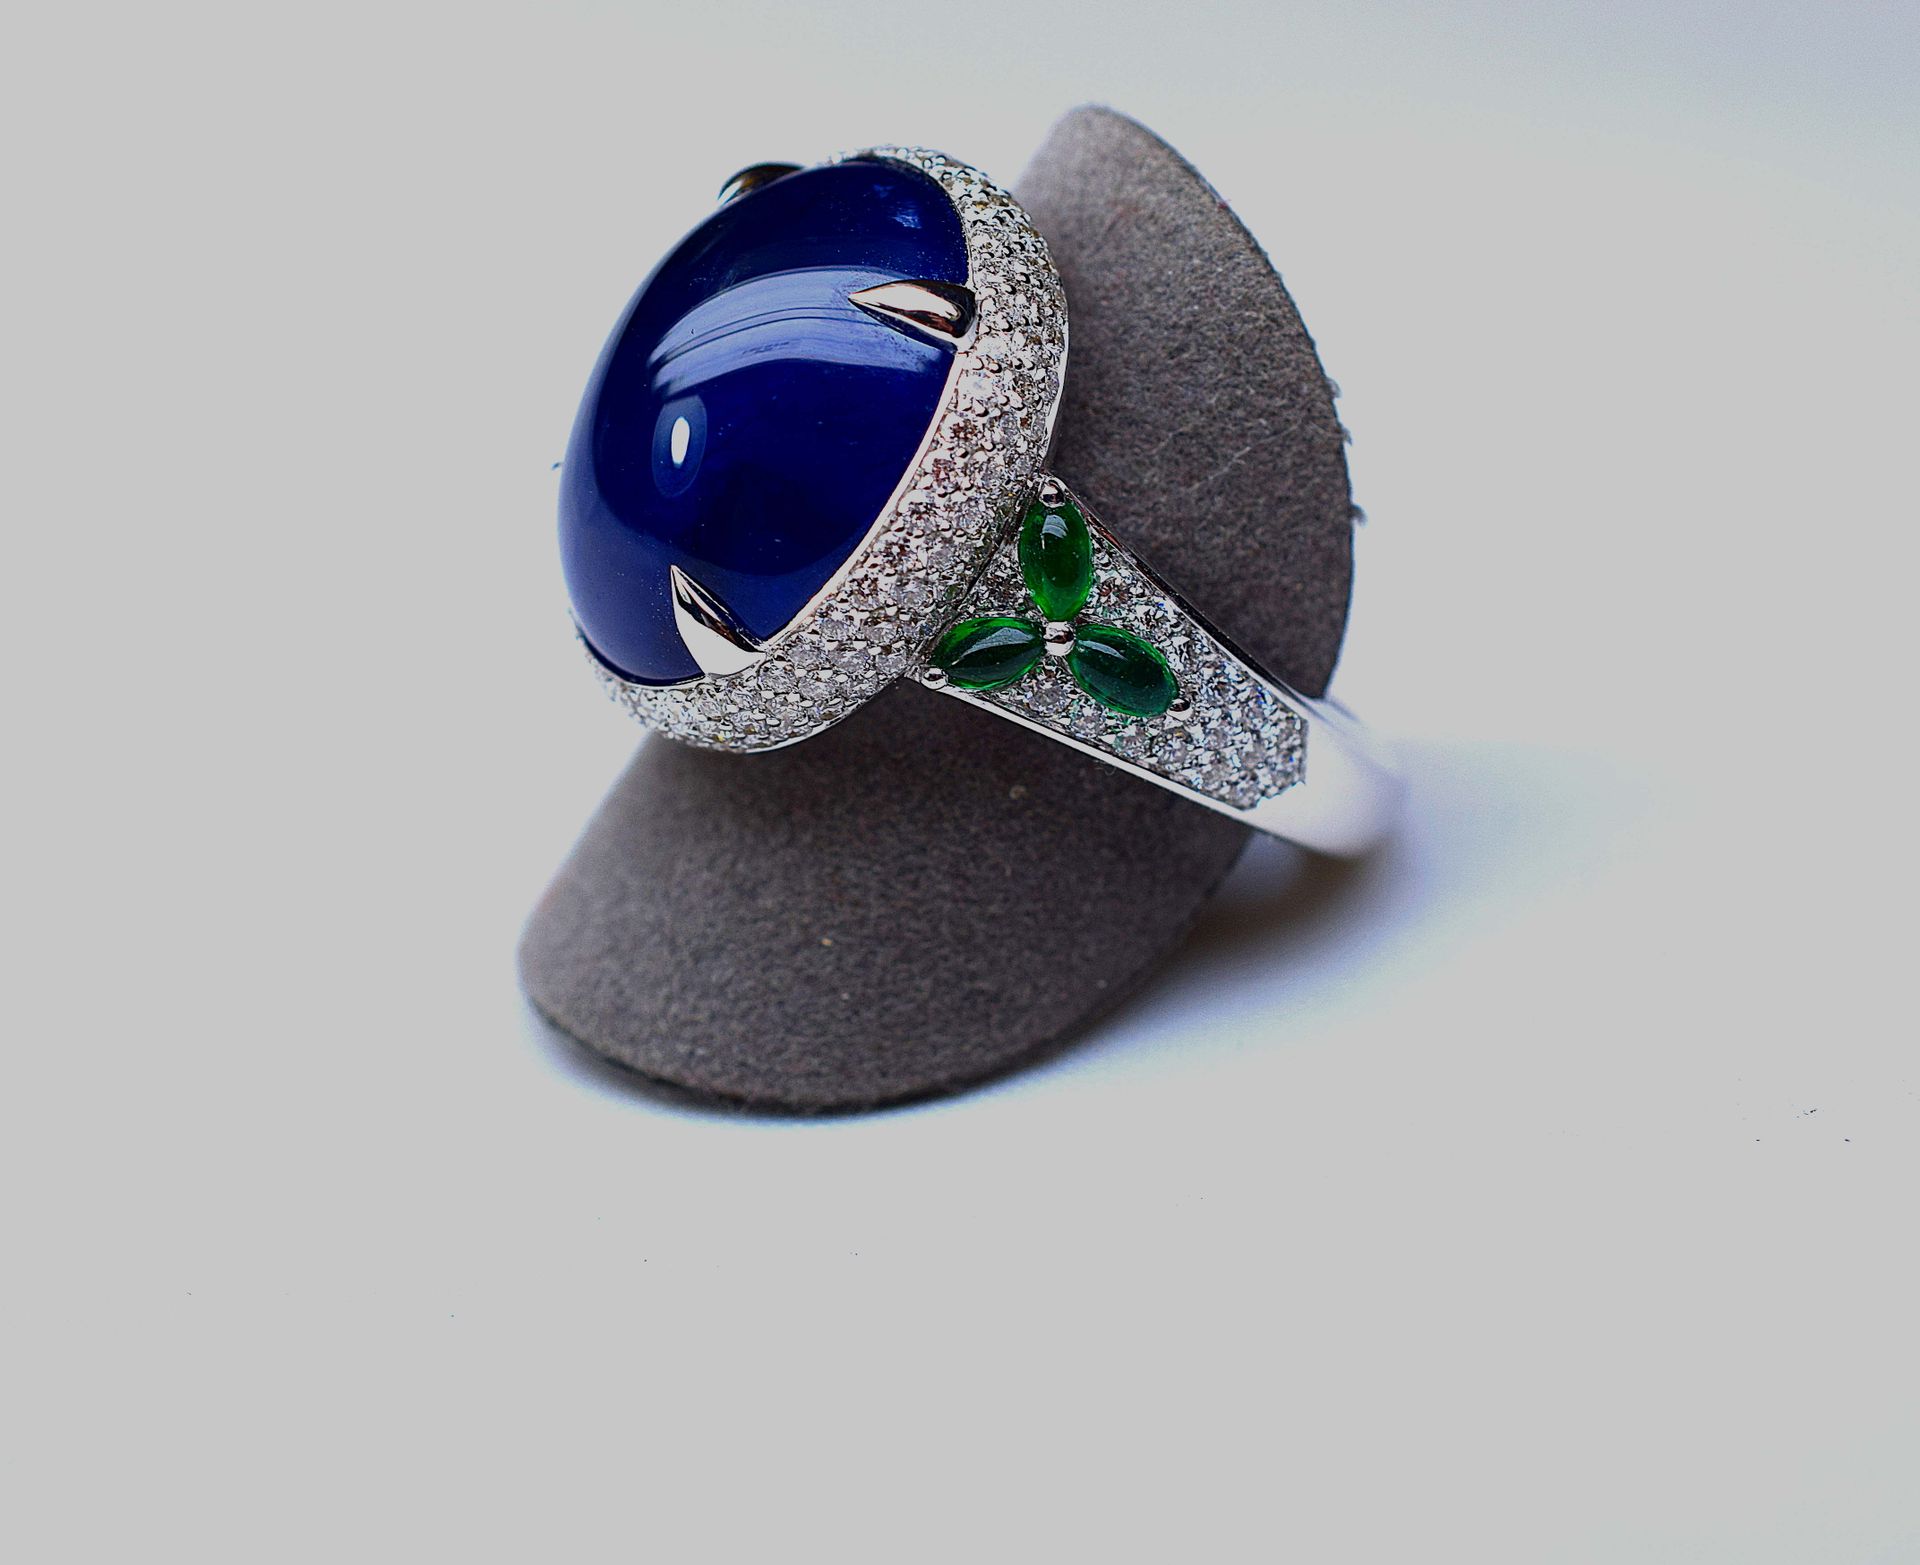 Null 白金戒指上镶嵌着一颗大型天然凸圆形蓝宝石，可能是锡兰的，重14.69克拉。 镶嵌着现代切割的圆钻和6颗天然榄尖形祖母绿，重约2克拉。黄金8.77克。这&hellip;